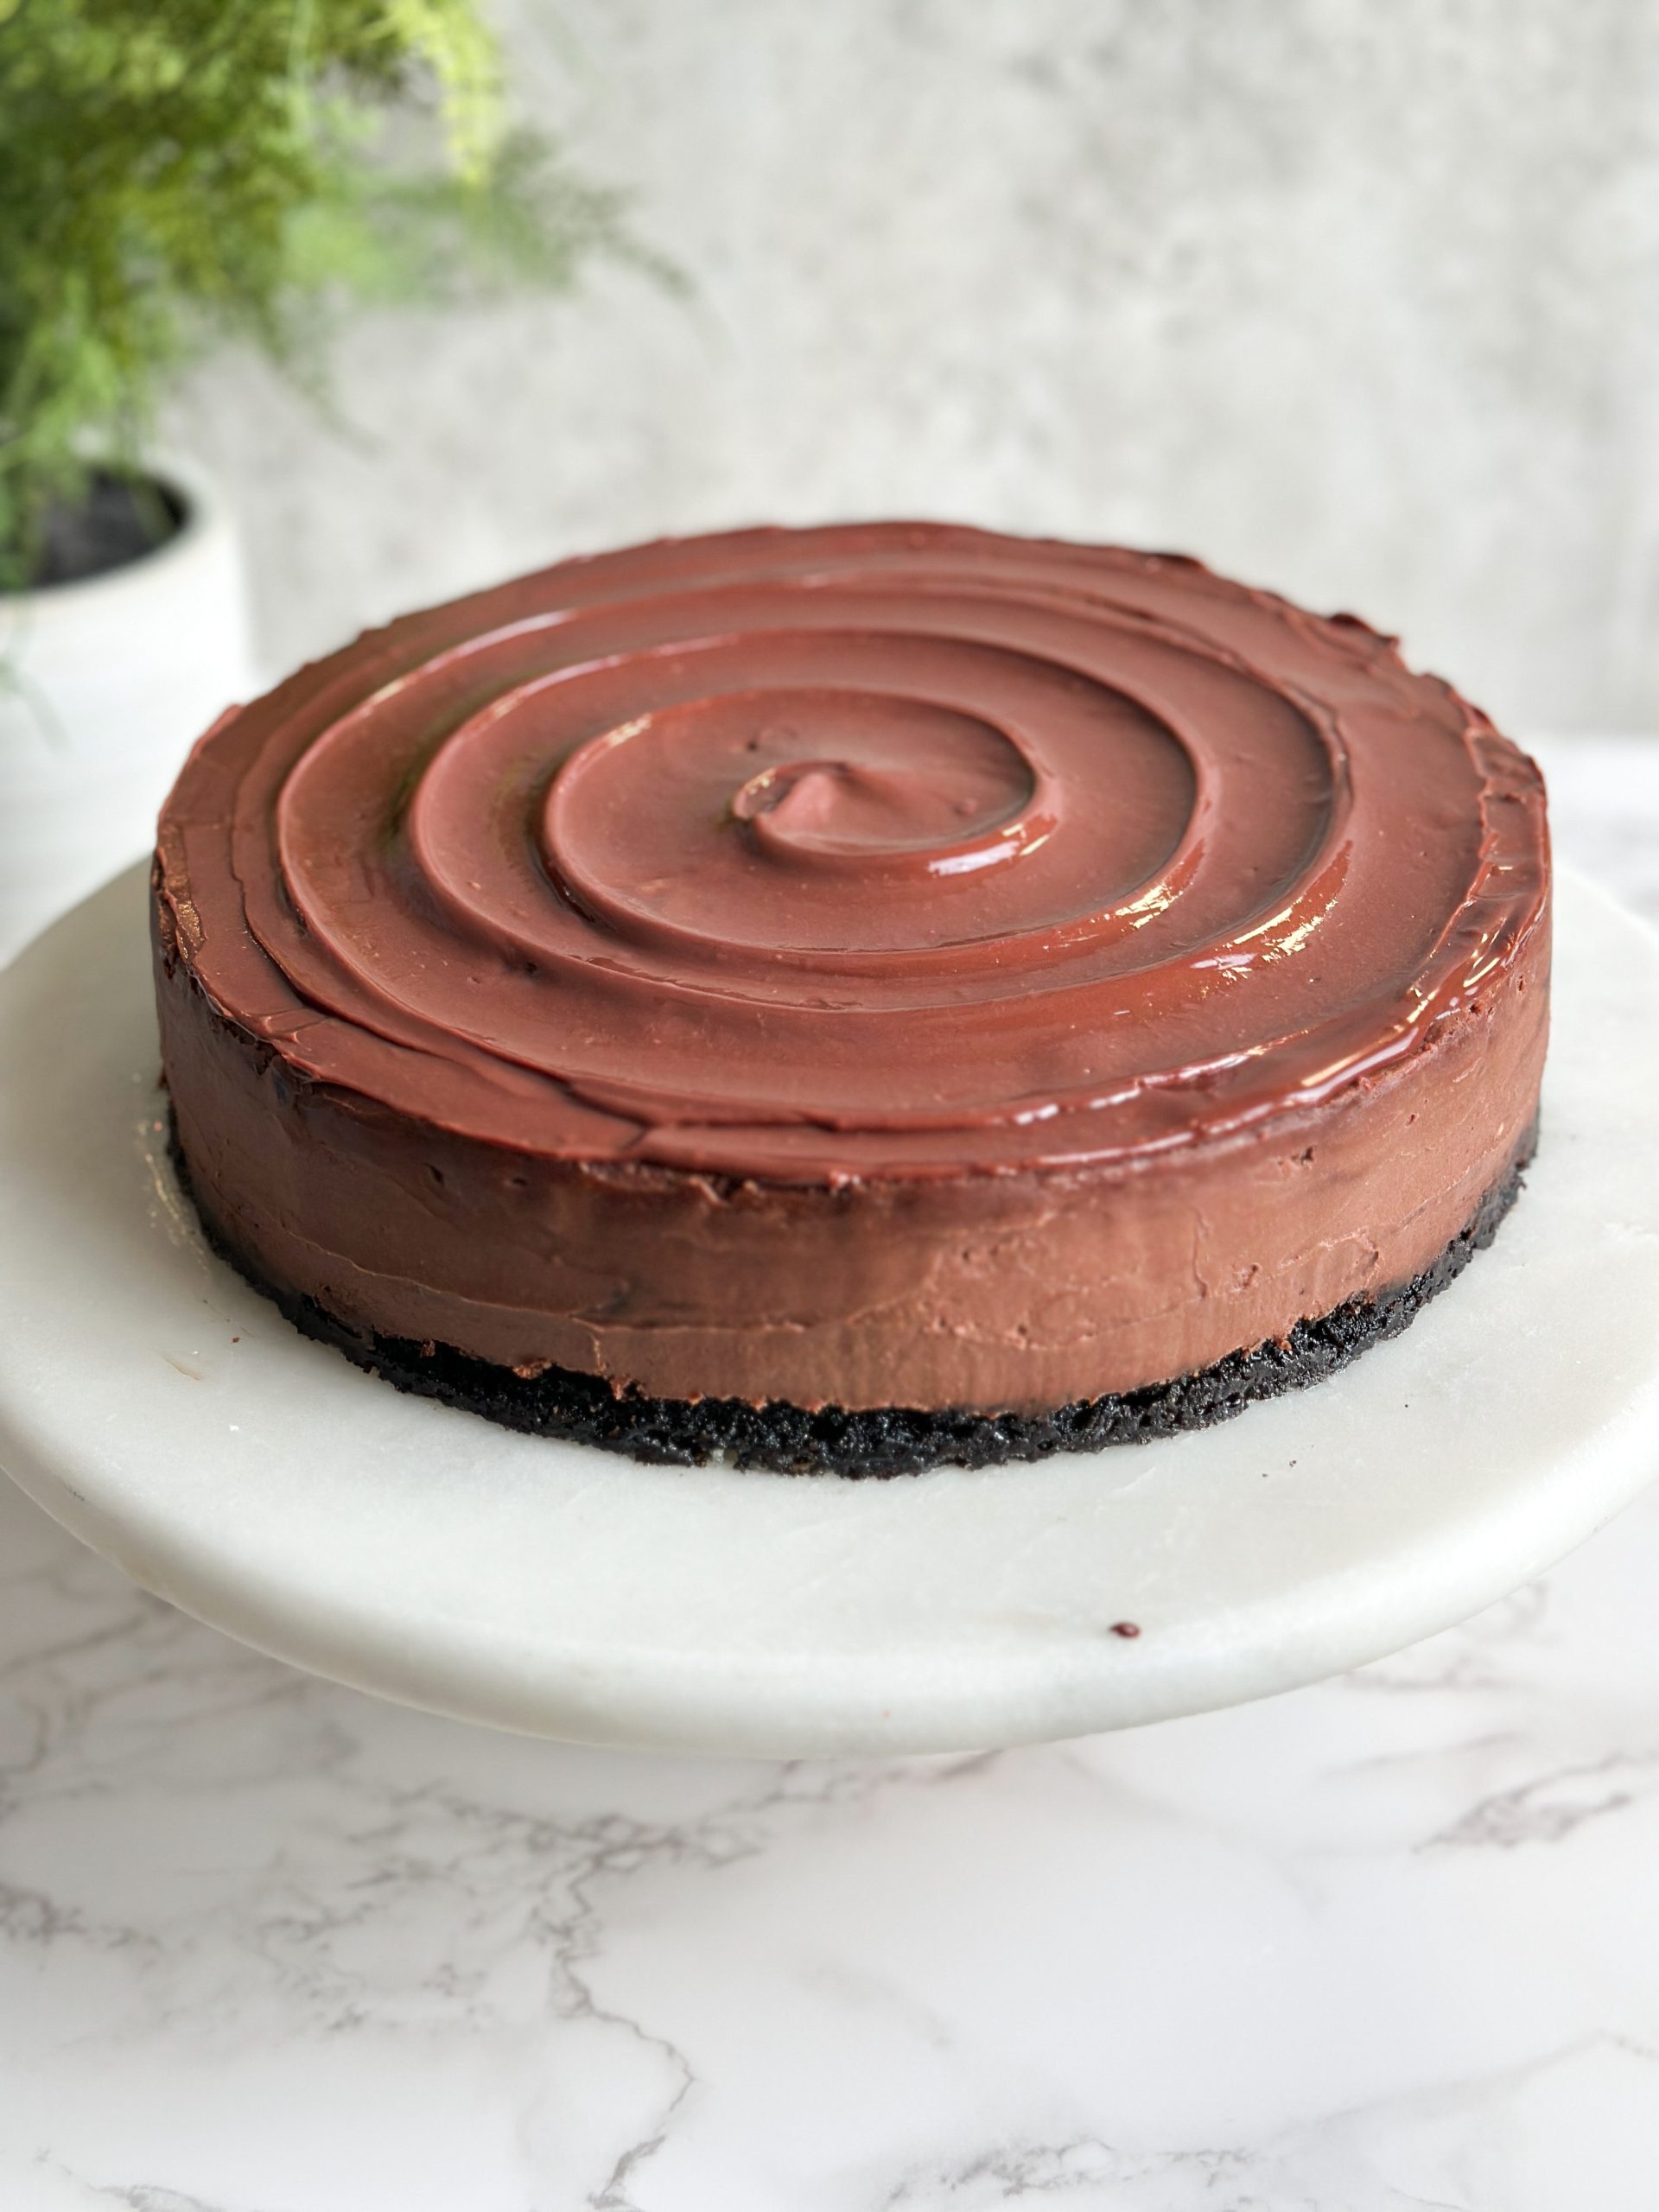 chocolate cheesecake with a shiny ganache swirl on the top 